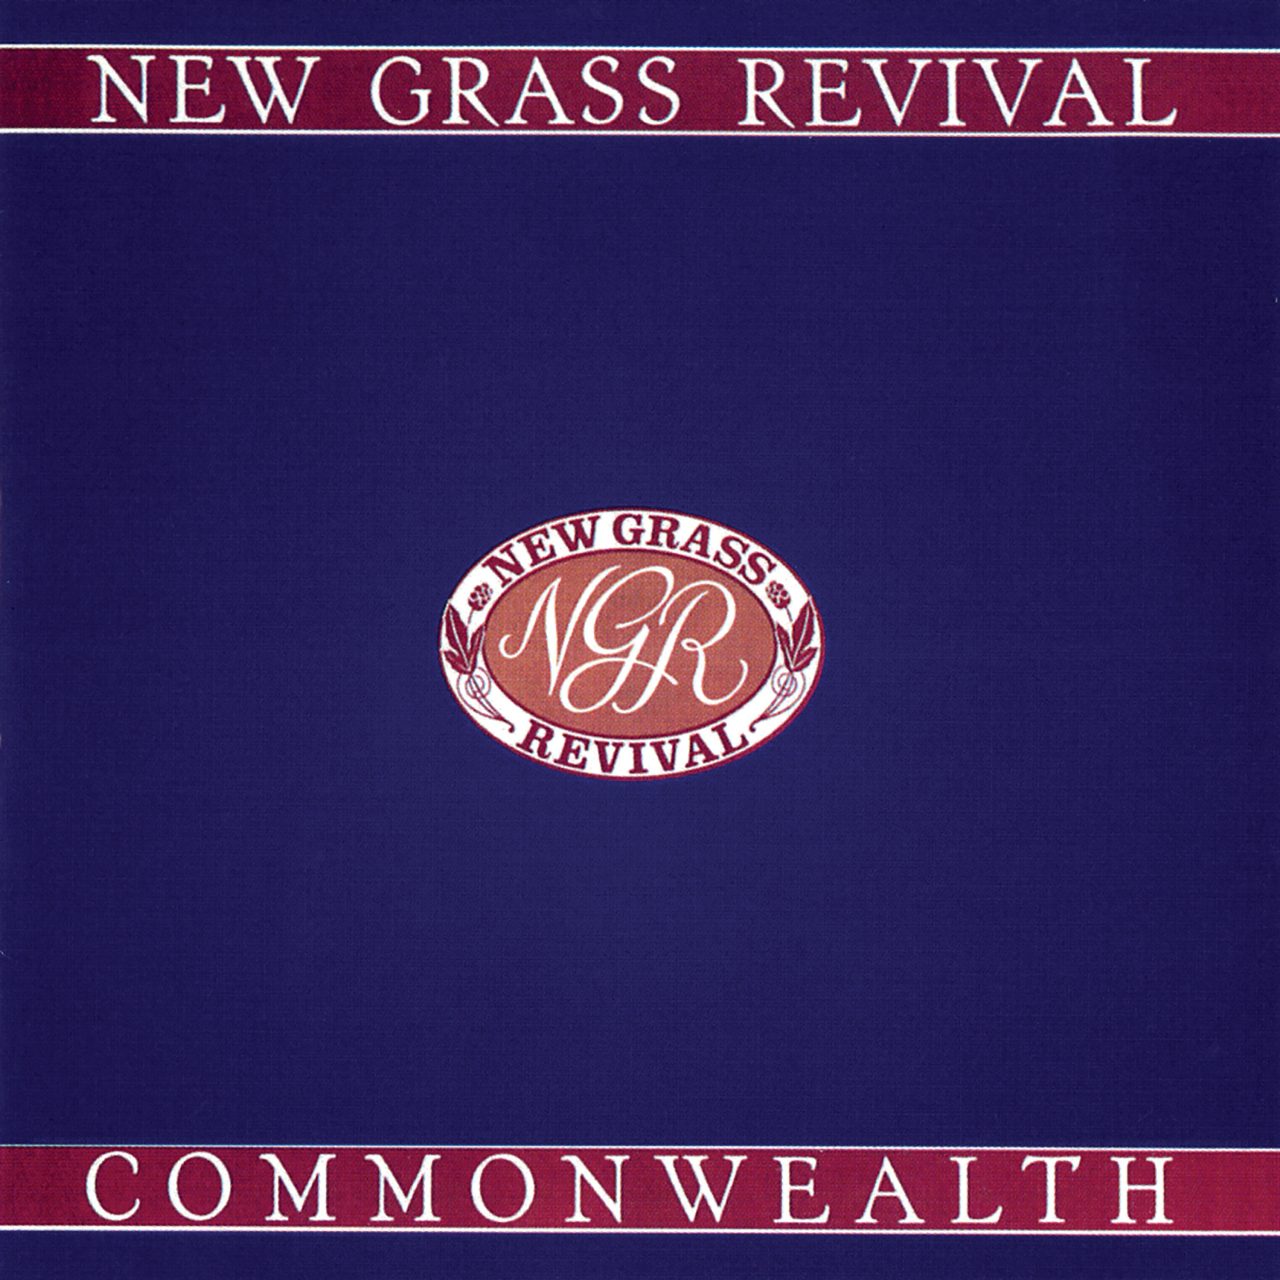 New Grass Revival – Commonwealth cover album